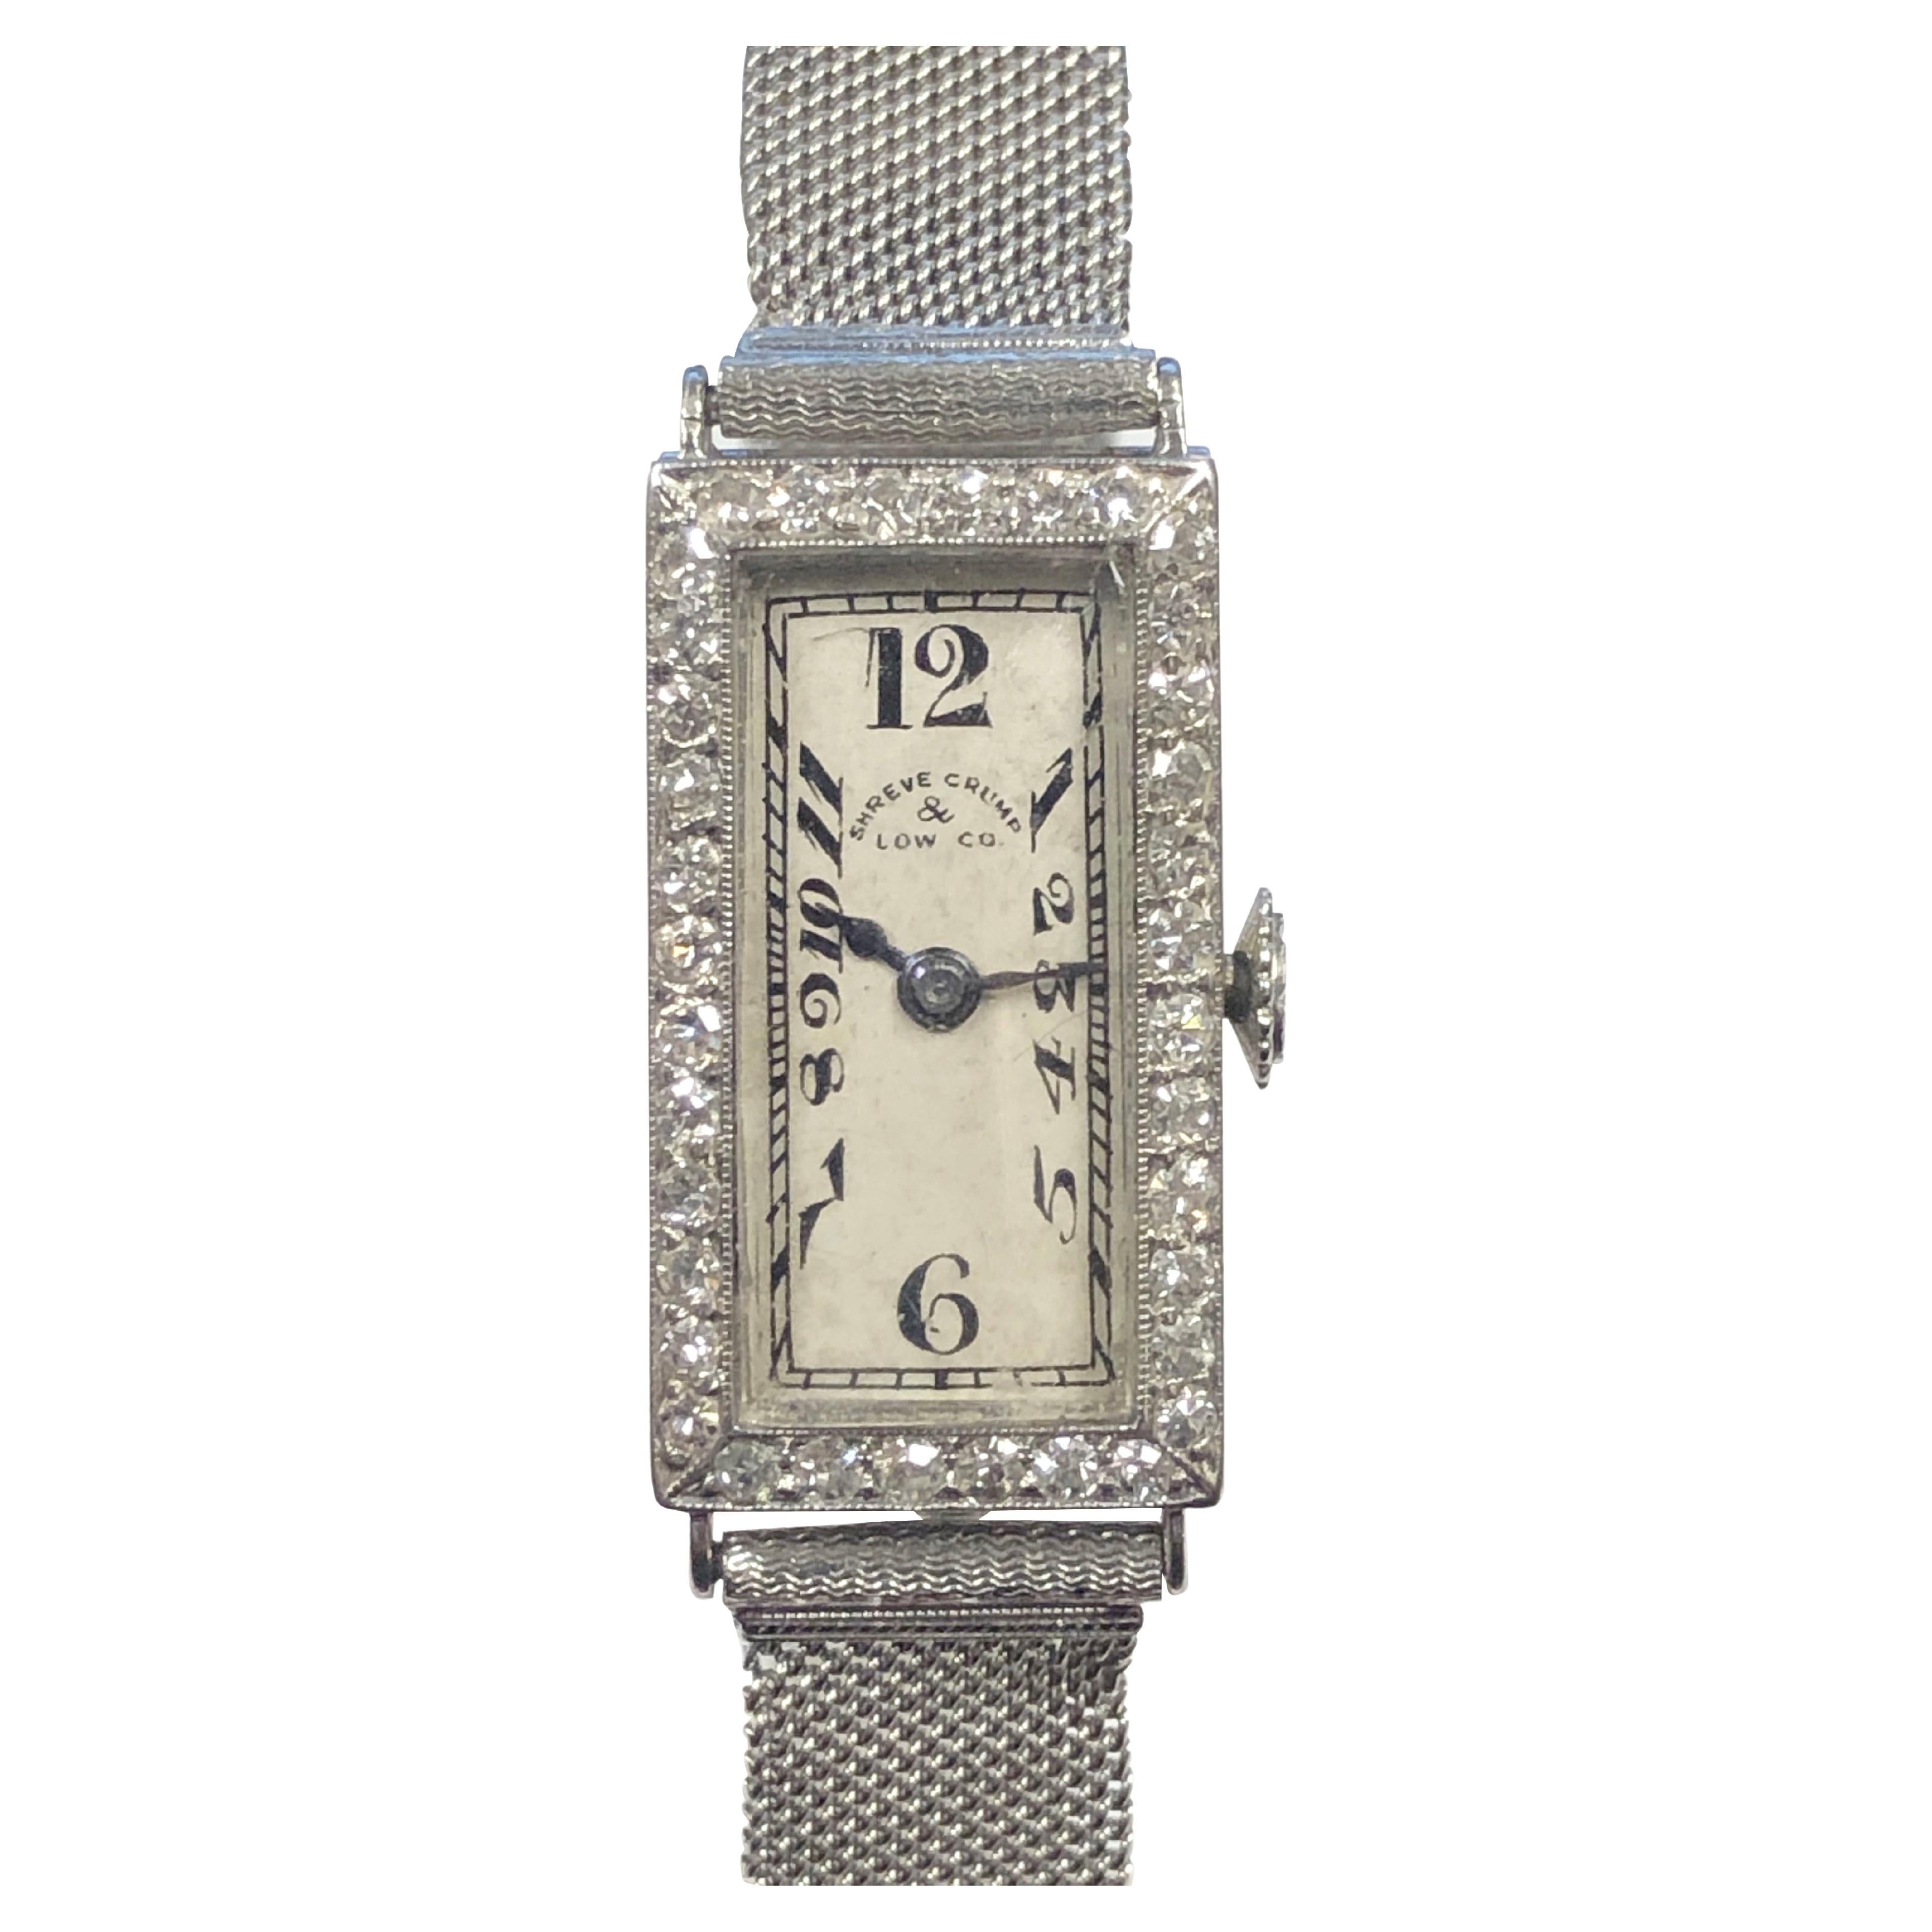 Patek Philippe for Shreve Crump & Low Platinum Diamond 1920s Ladies Wrist Watch